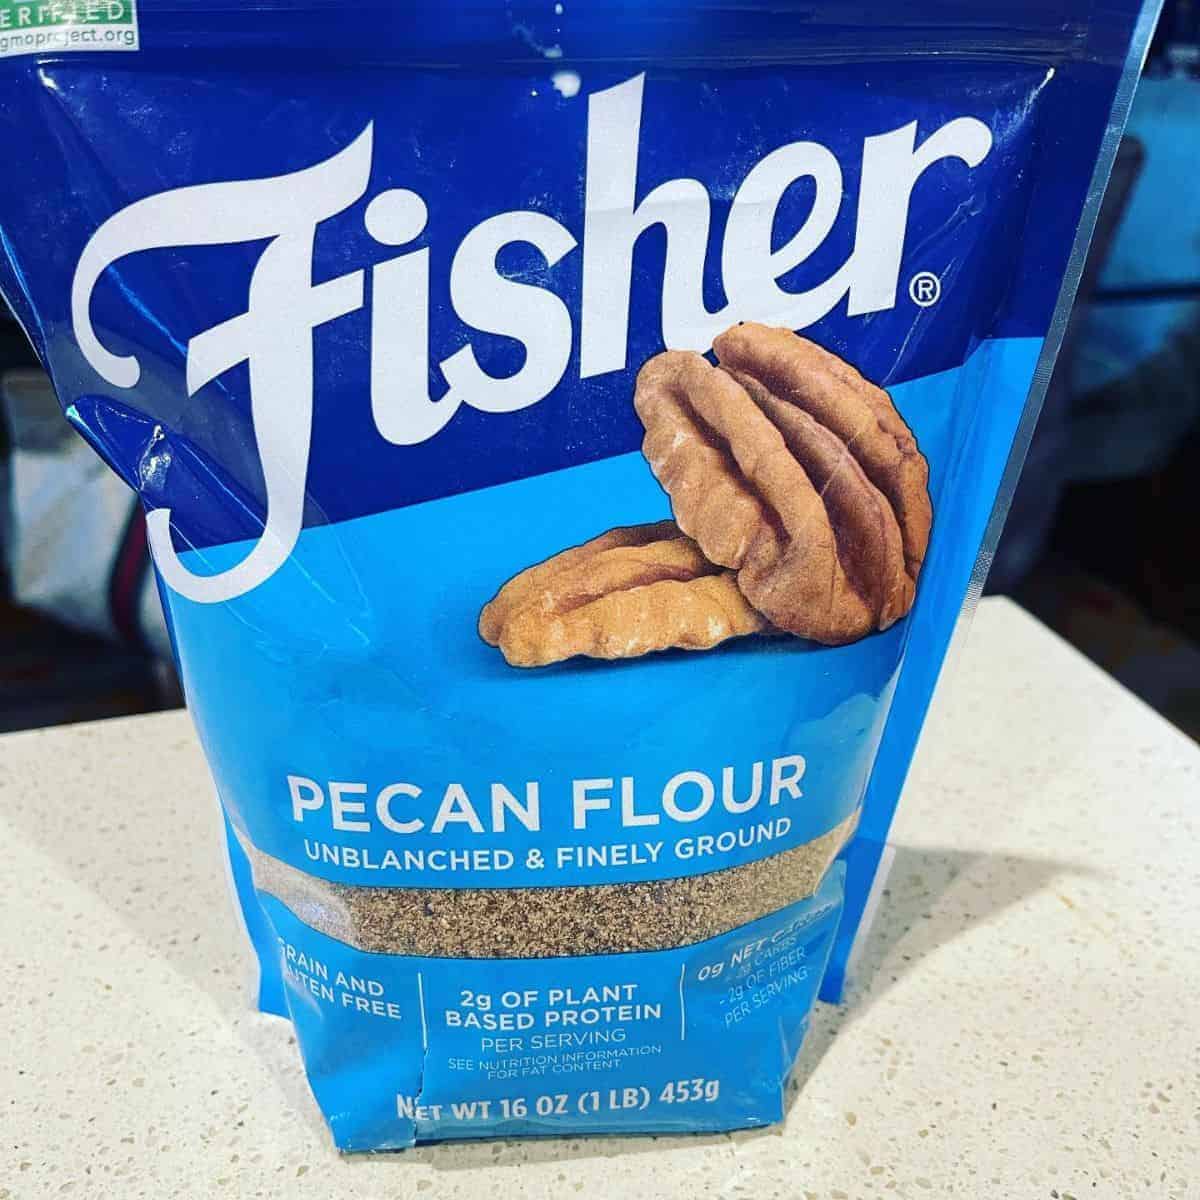 Pecan flour in a blue packaging as a tapioca flour substitute